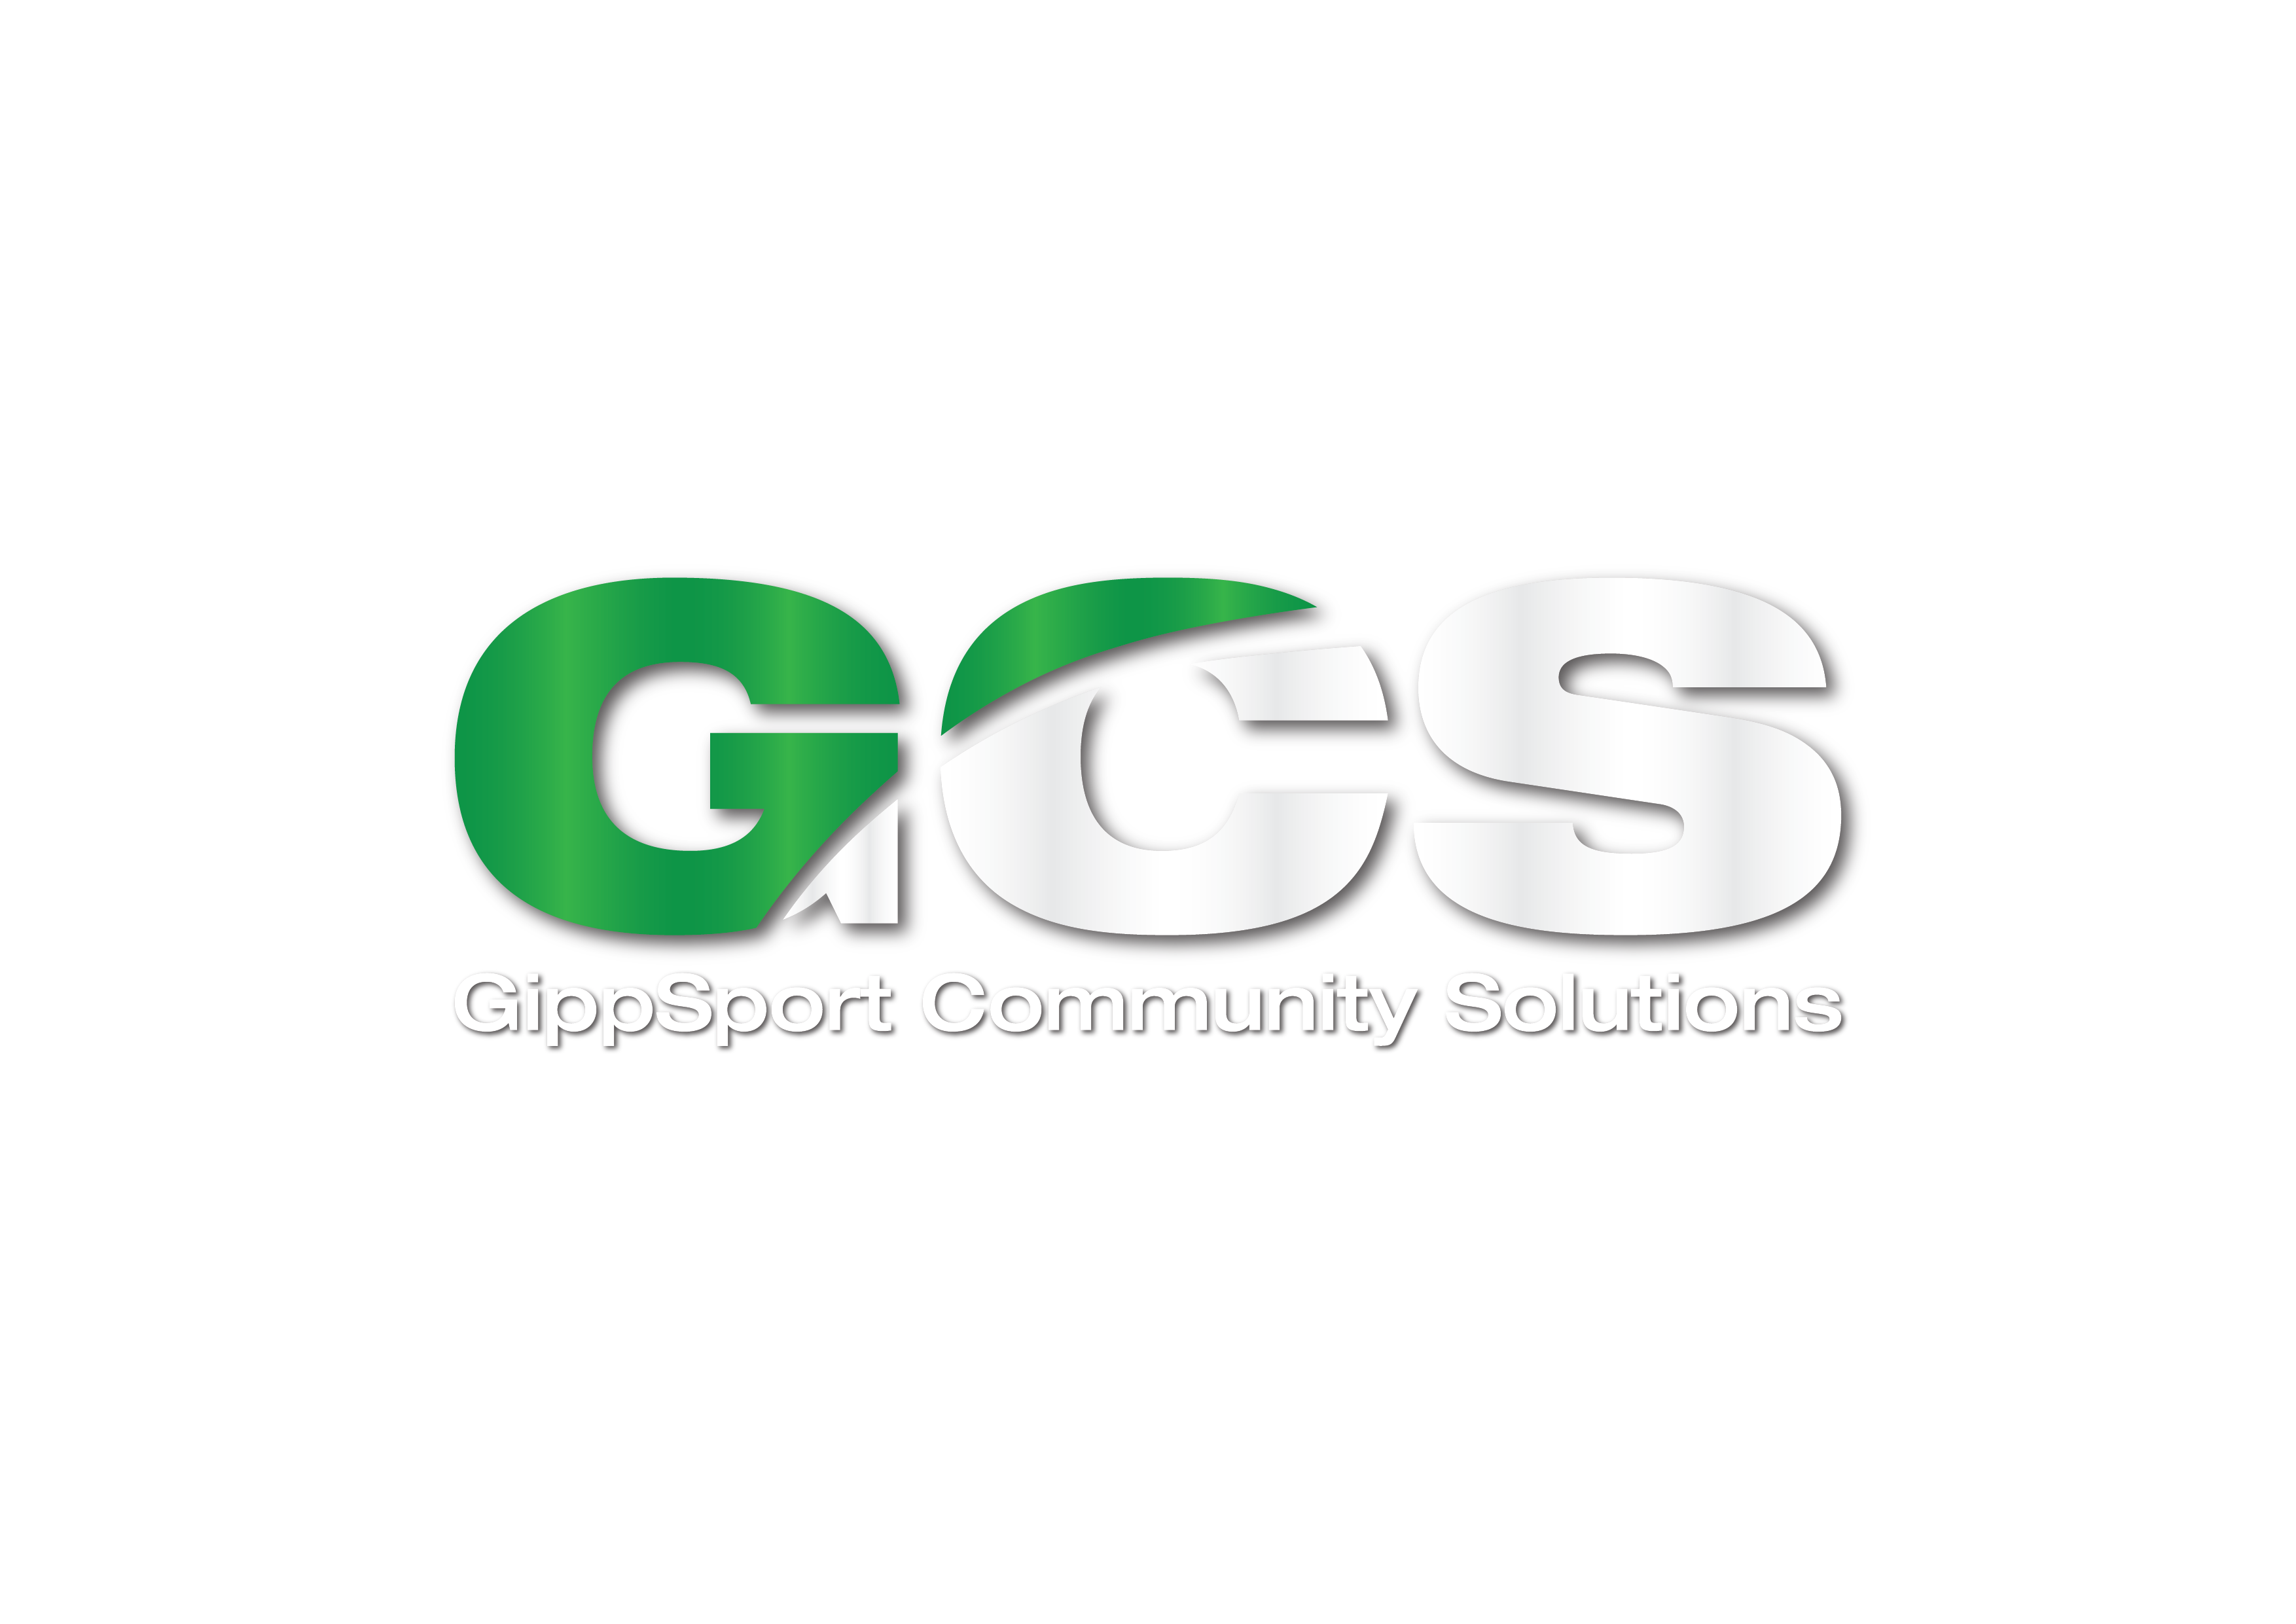 GippSport Community Solutions